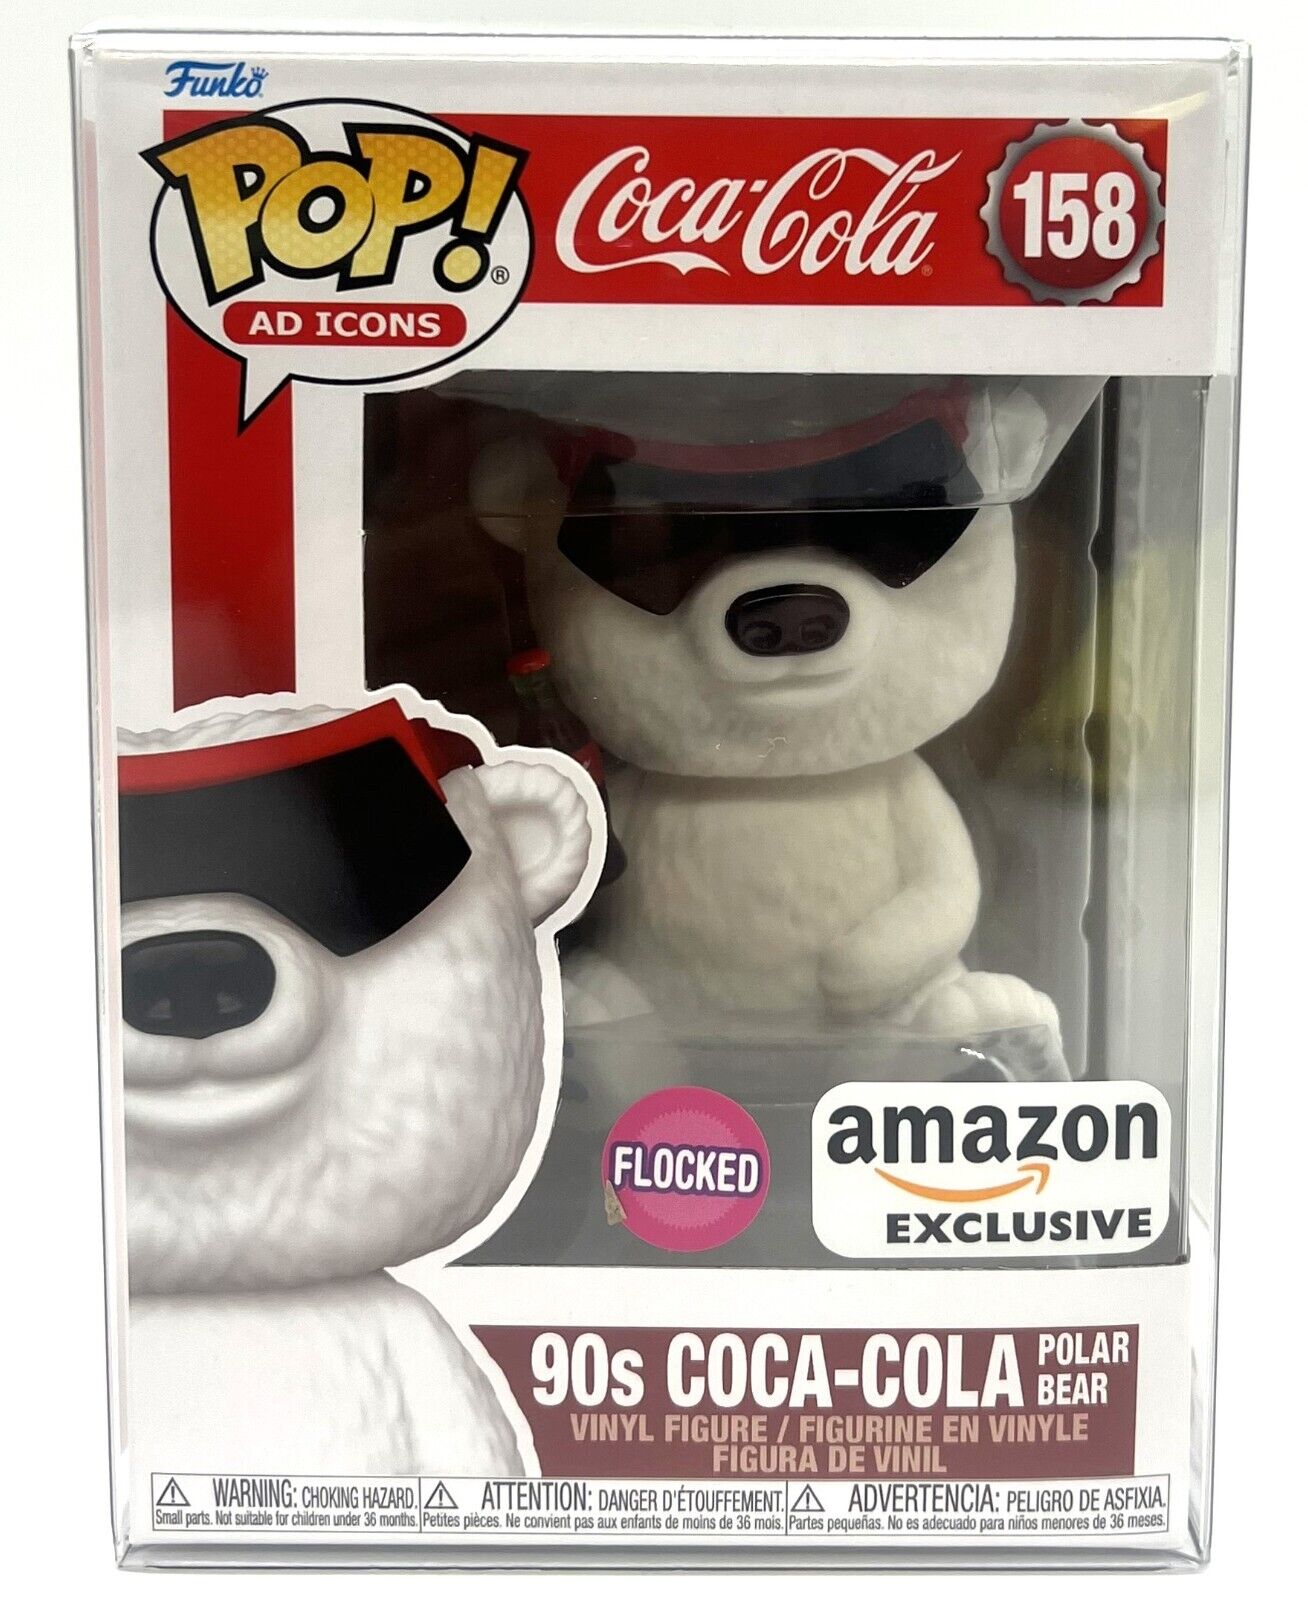 Funko Pop AD Icons Coca Cola 90s Polar Bear Flocked #158 Amazon Exclusive